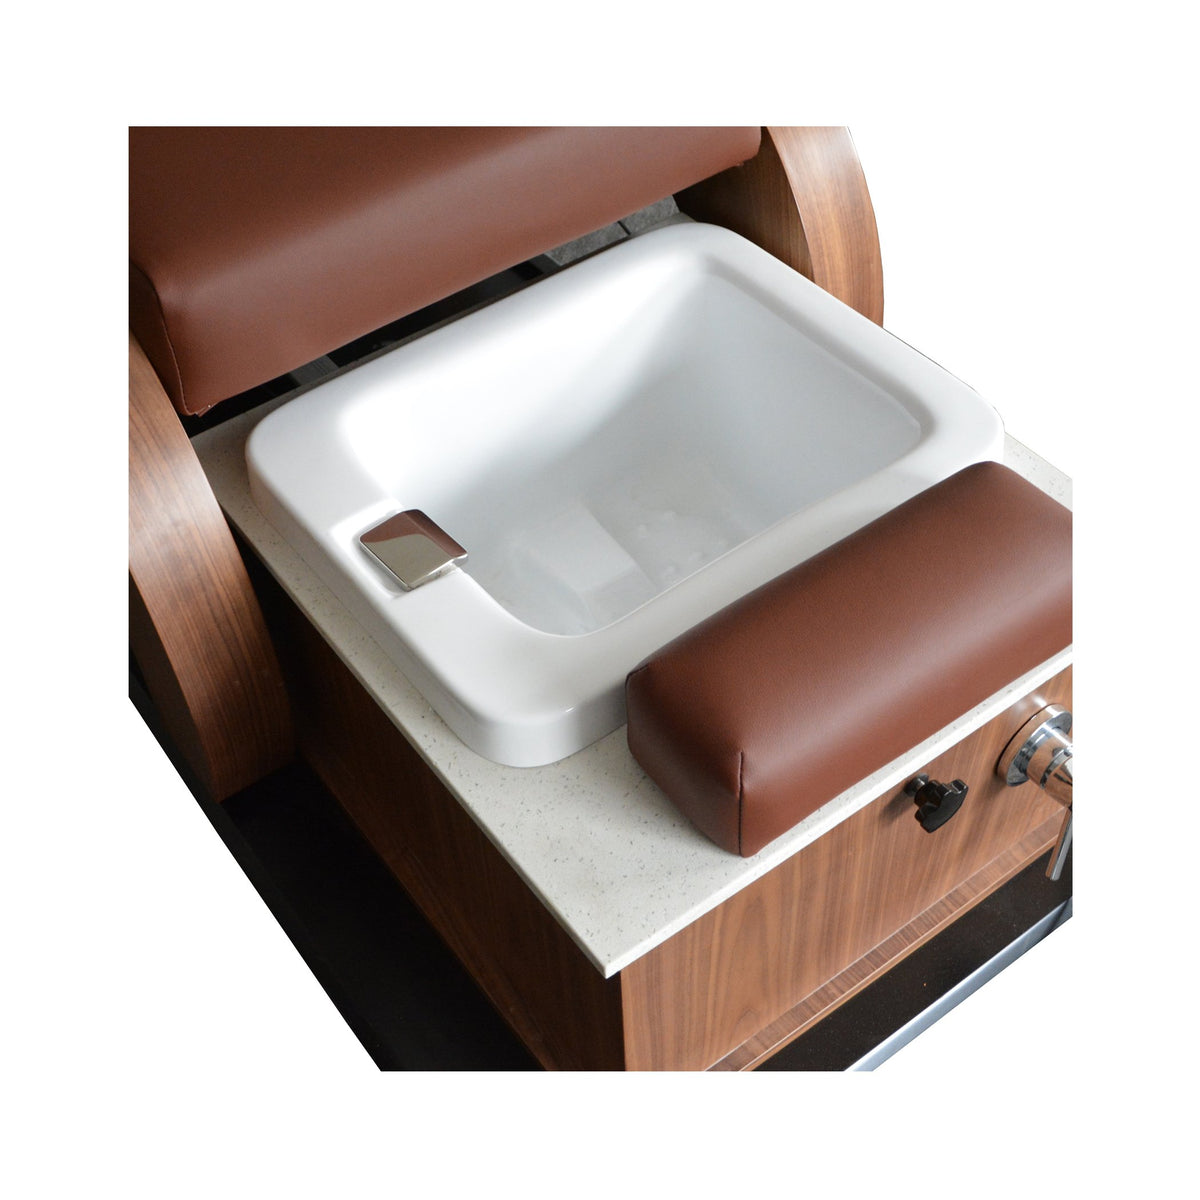 Touch America - Archipedigo Foot Treatment Lounge - Superb Massage Tables